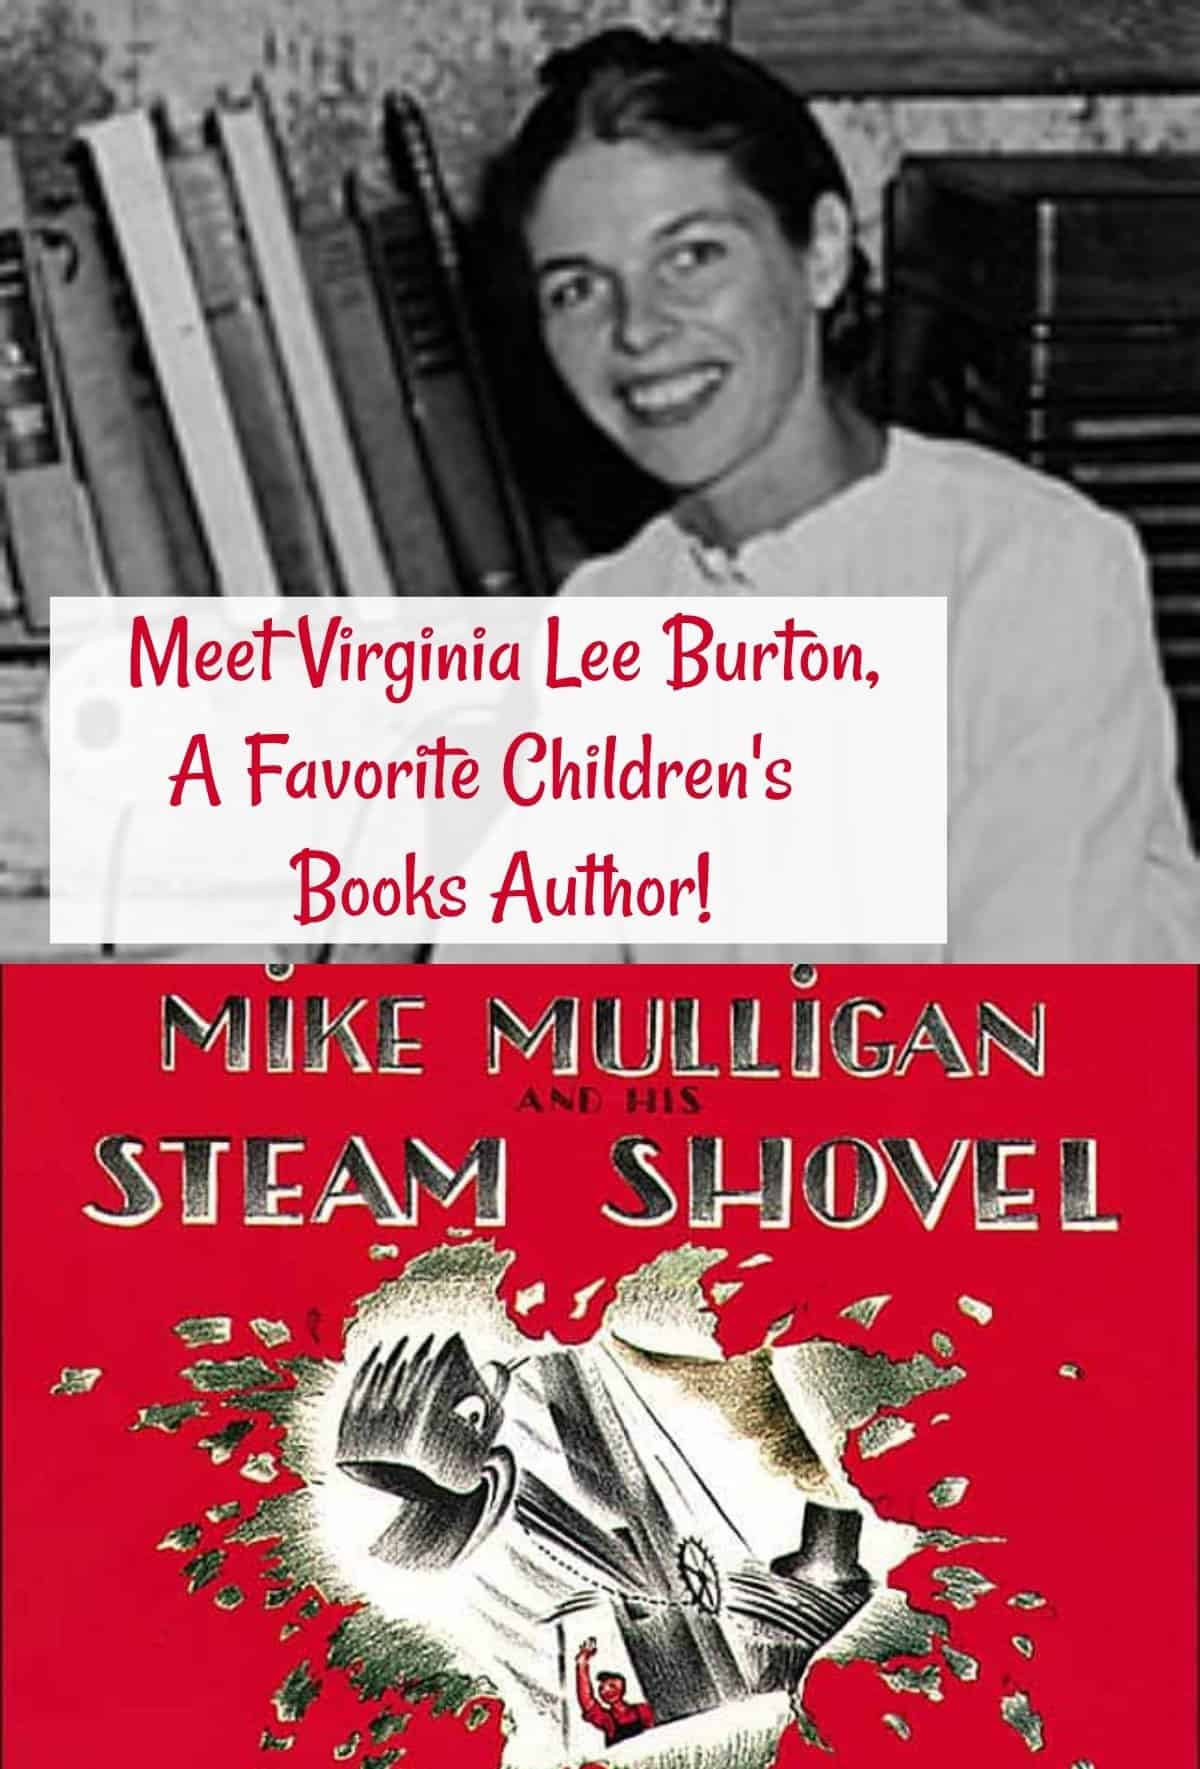 Meet Virginia Lee Burton, A Favorite Children's Books Author. Virginia Lee Burton and her book Mike Mulligan and His Steam Engine. Caldecott Medal-winning author, 